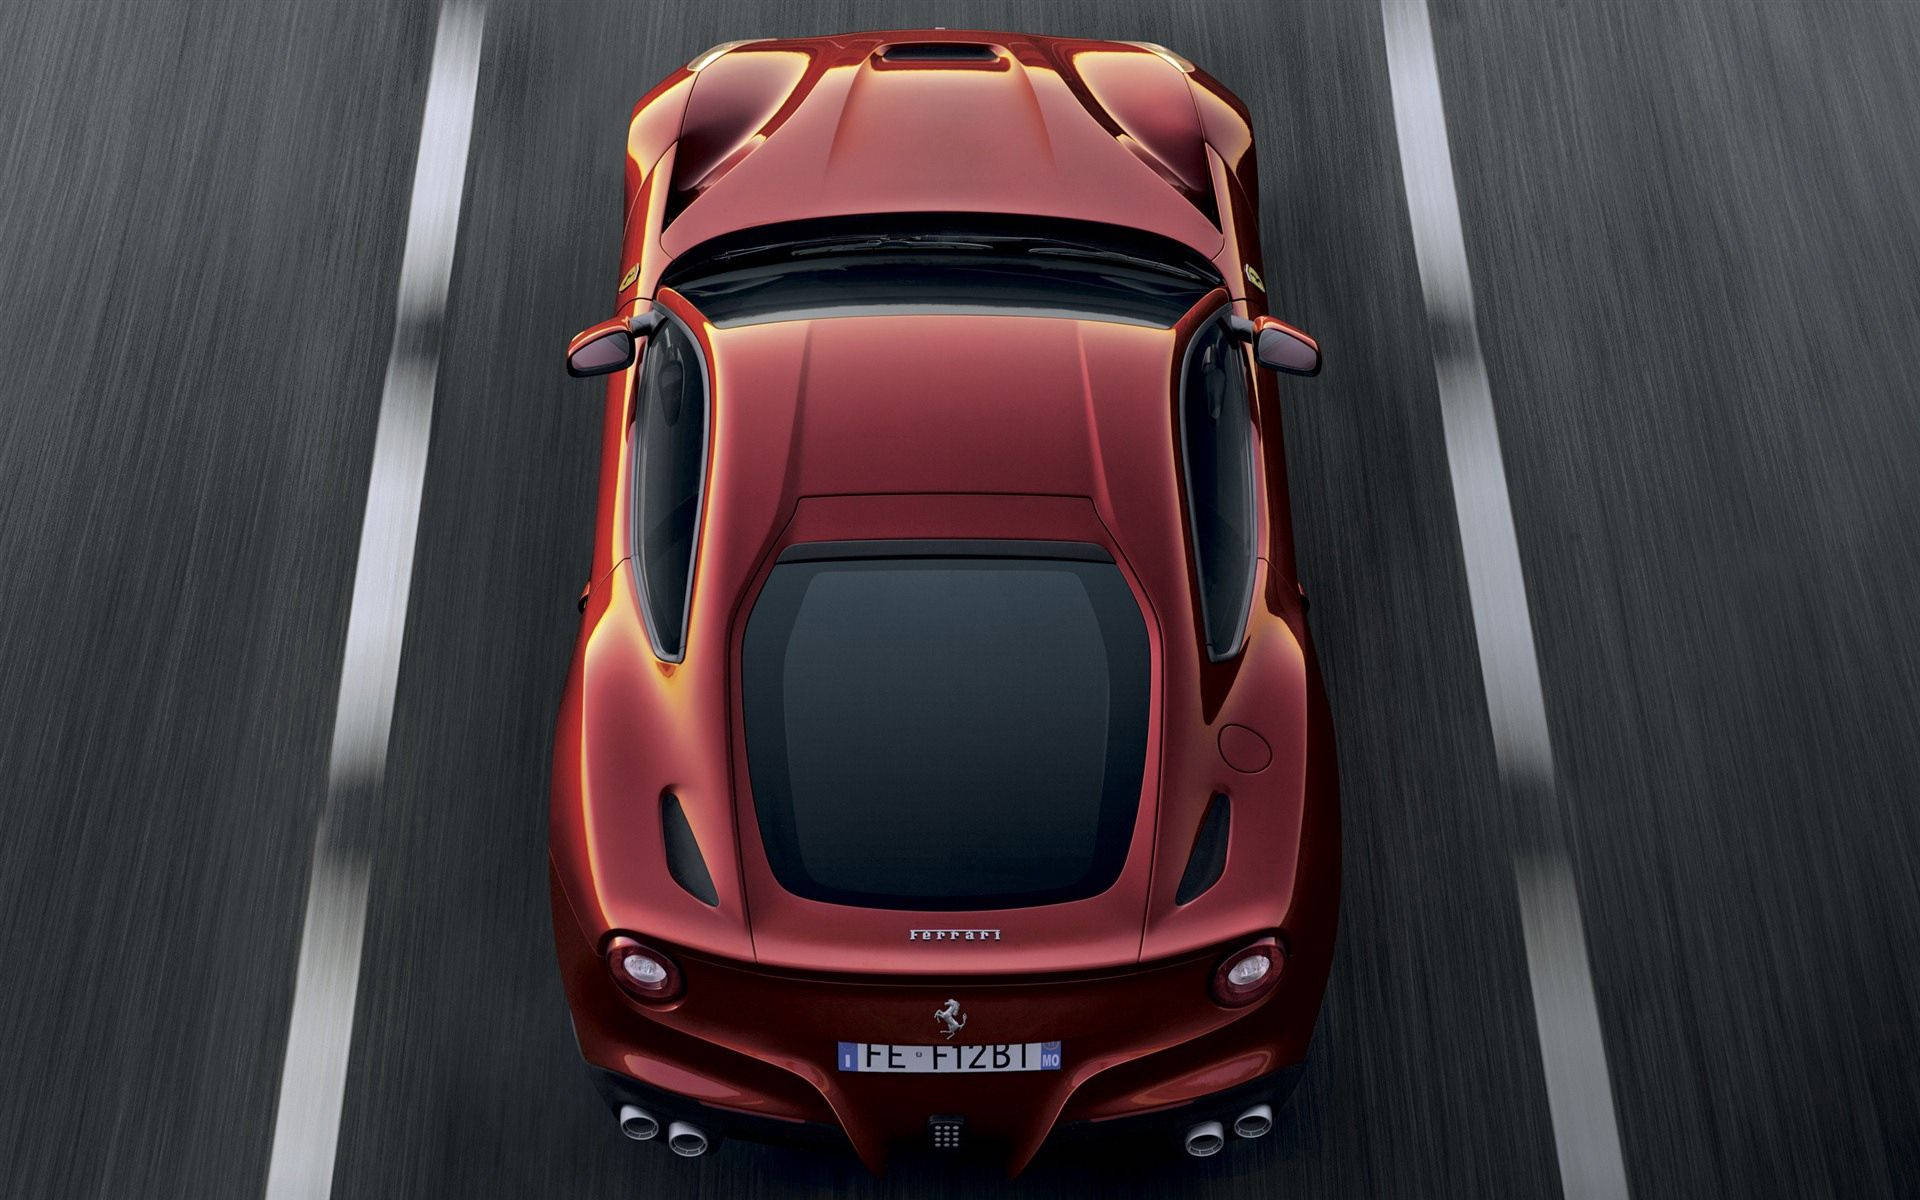 Supercar speed and power - a red Ferrari Wallpaper